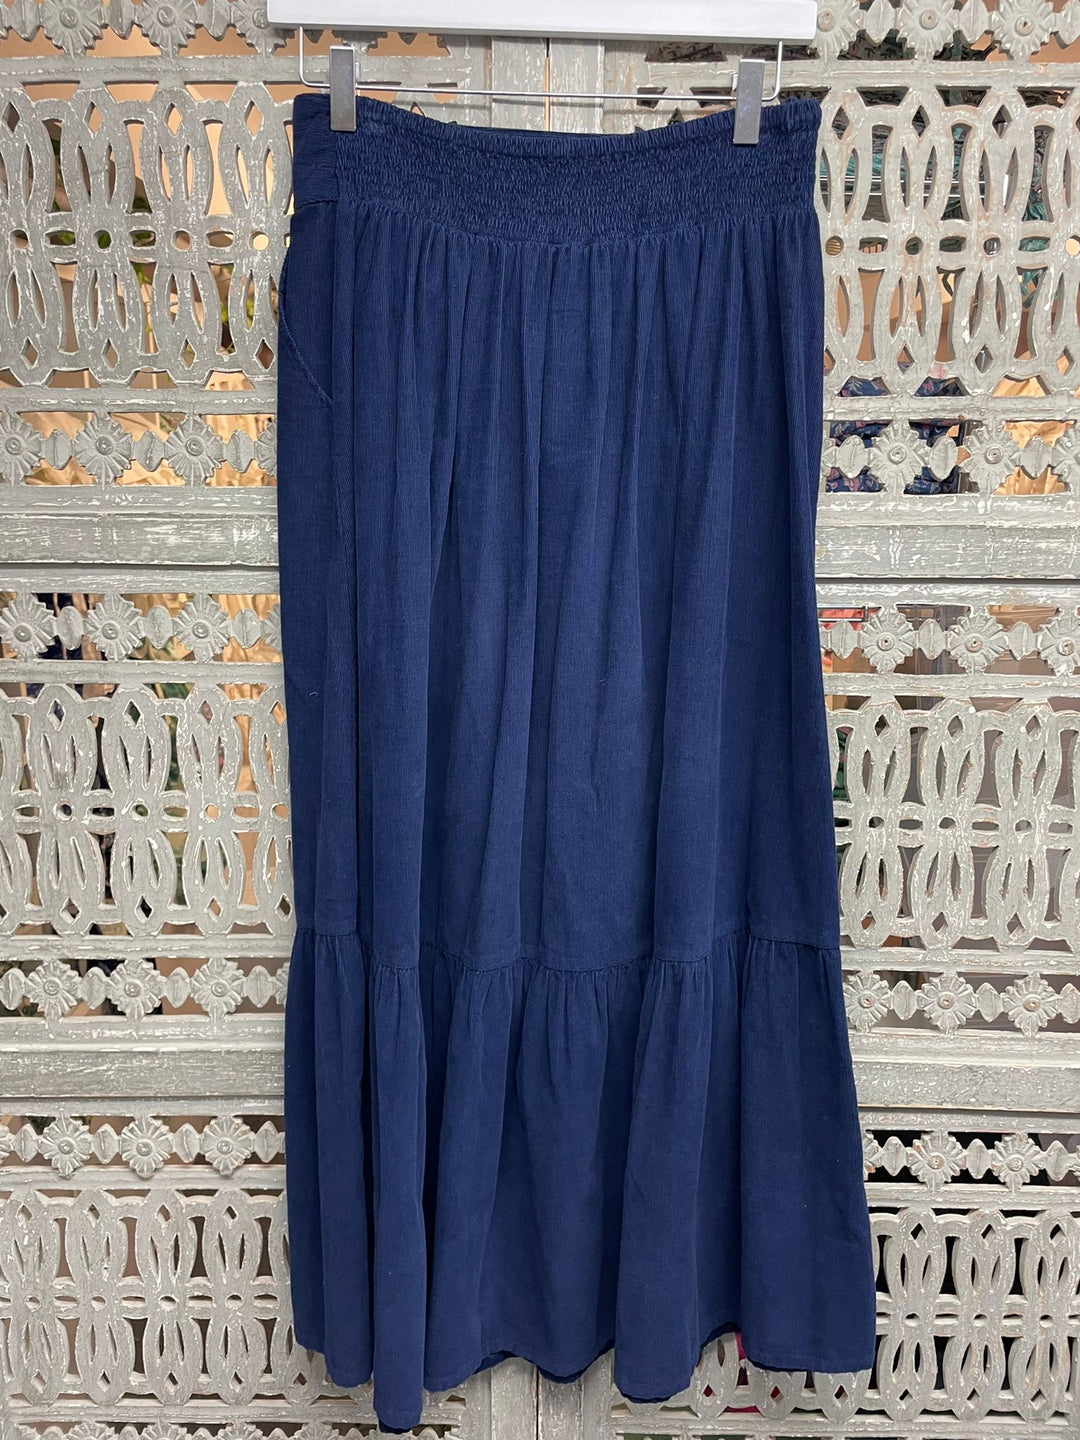 Sample 63 NO RETURNS - Medium (10-12) Dakota needlecord maxi skirt